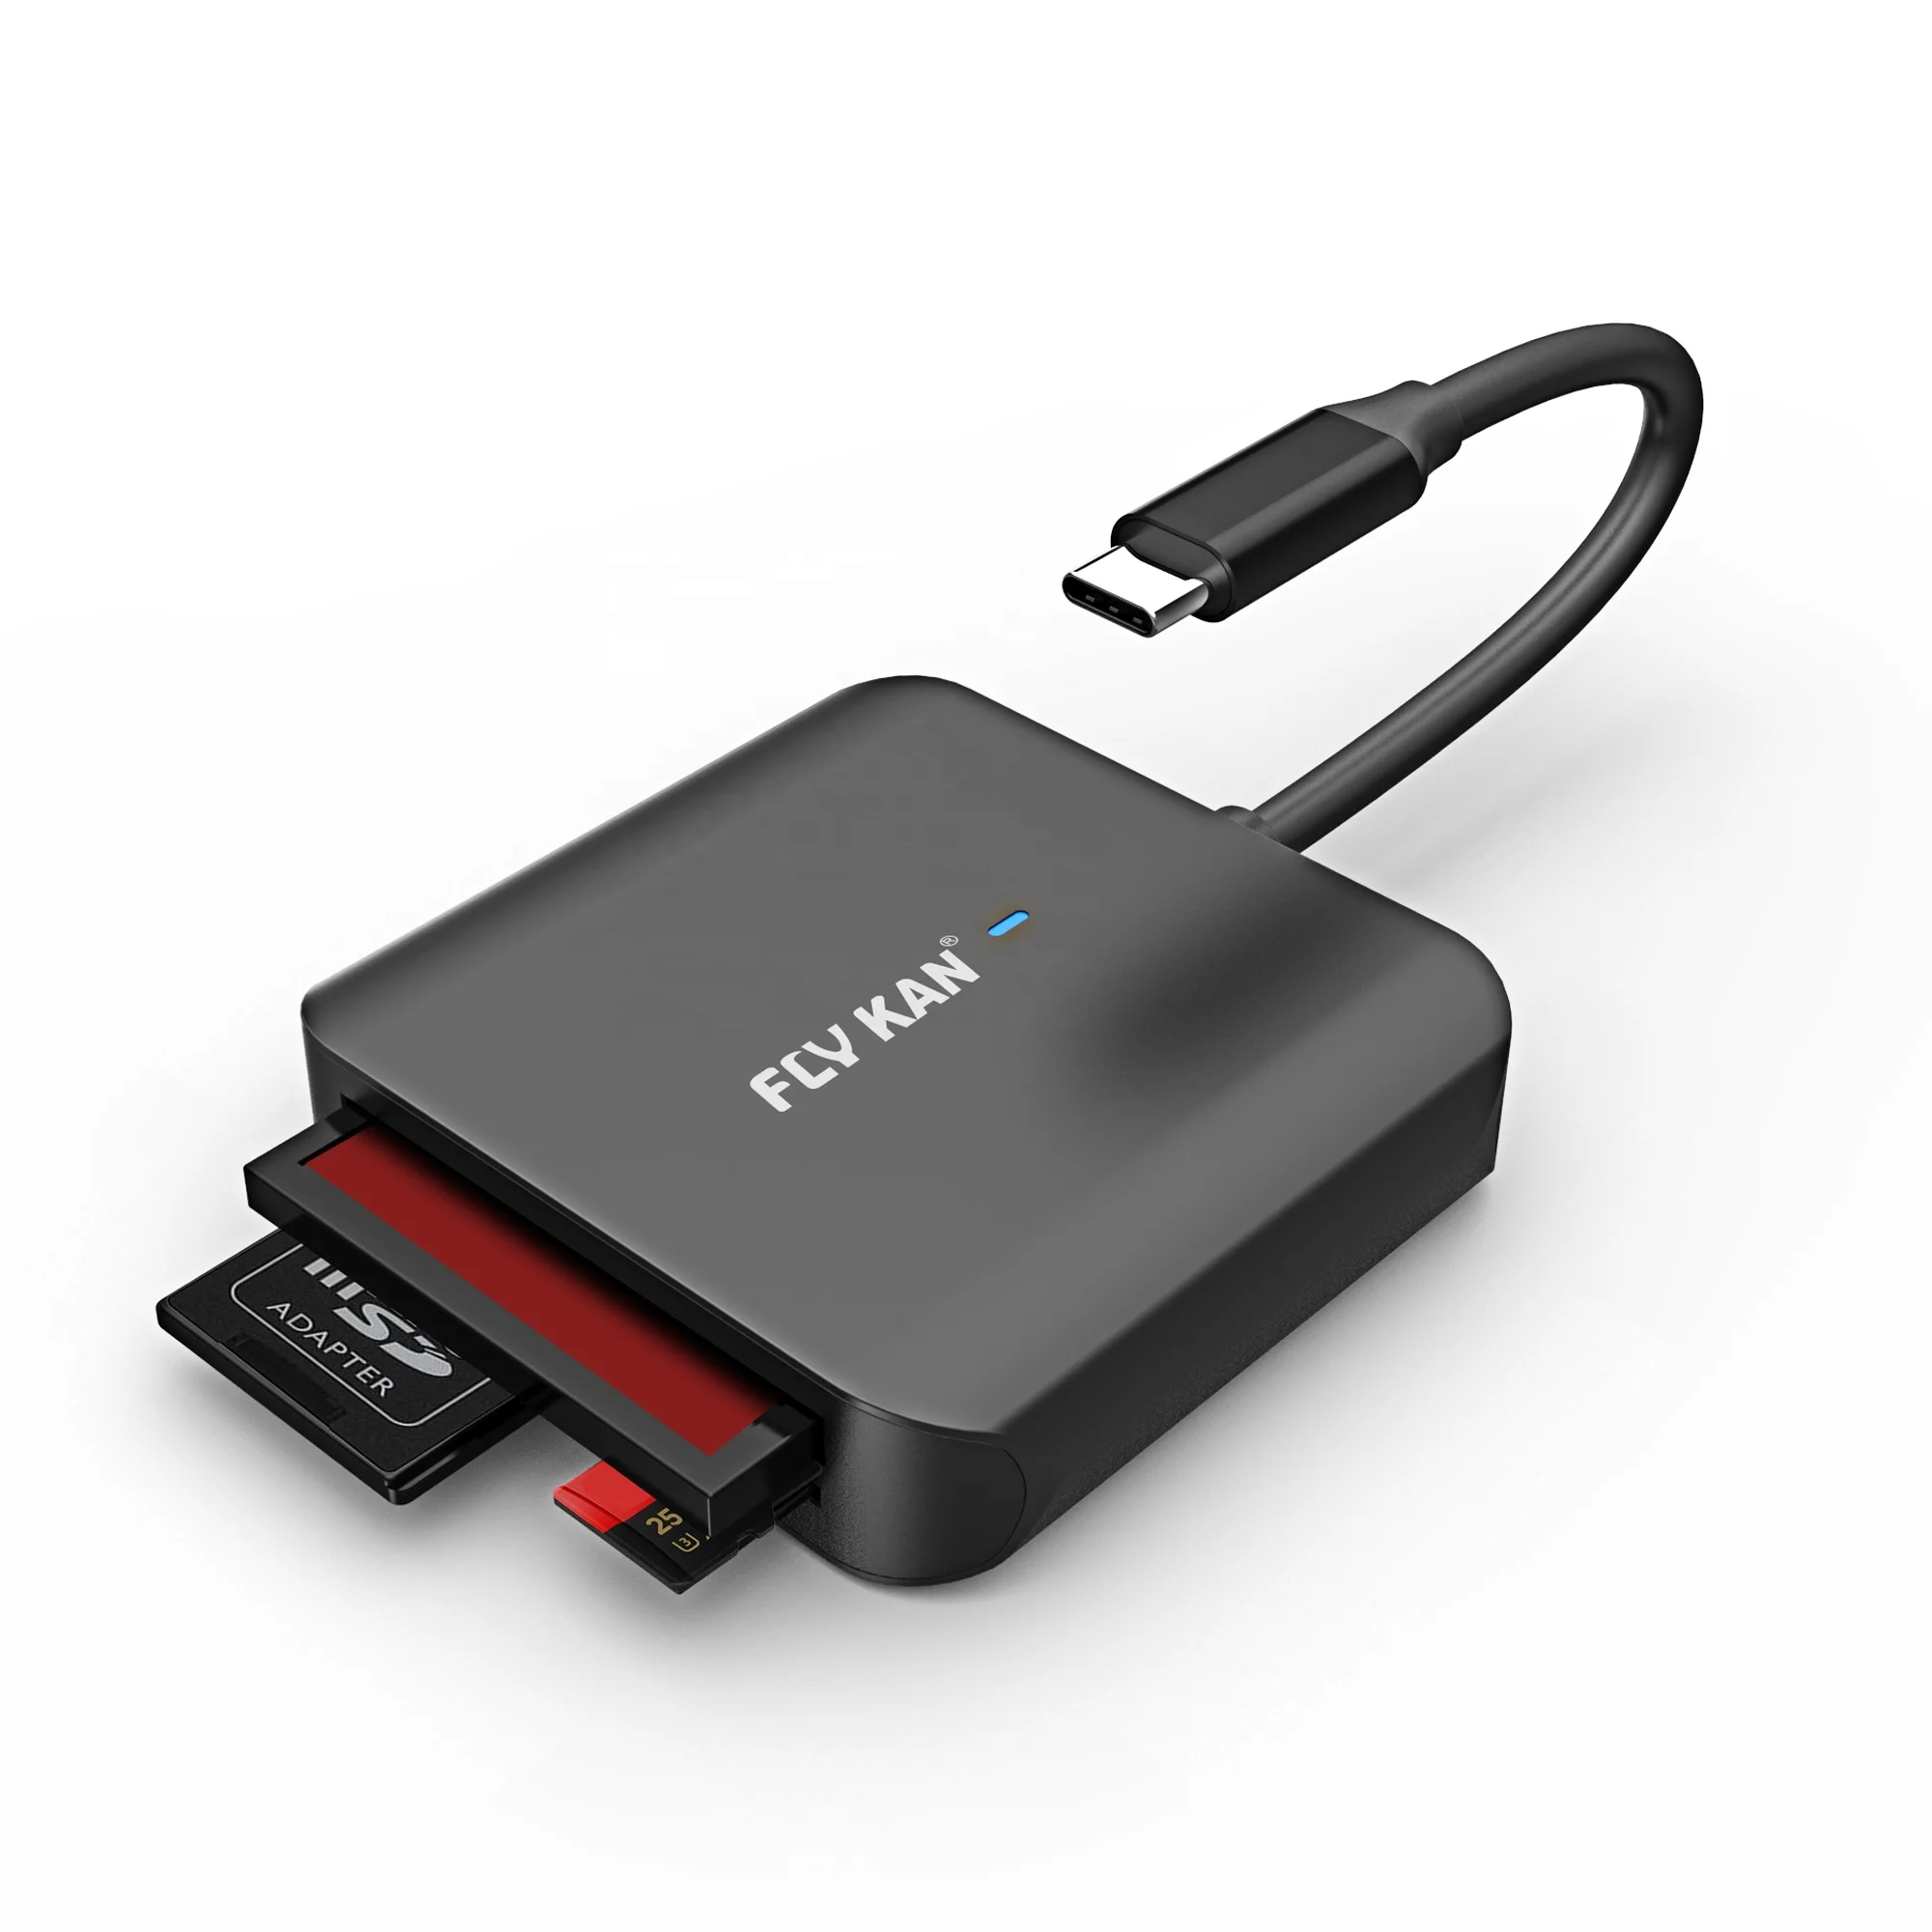 
USB C Compact Flash Cardreader   USB C Gen 1 UHS II Multi Card Reader / Writer (SD 4.0, microSD4.0, CF) HB080 